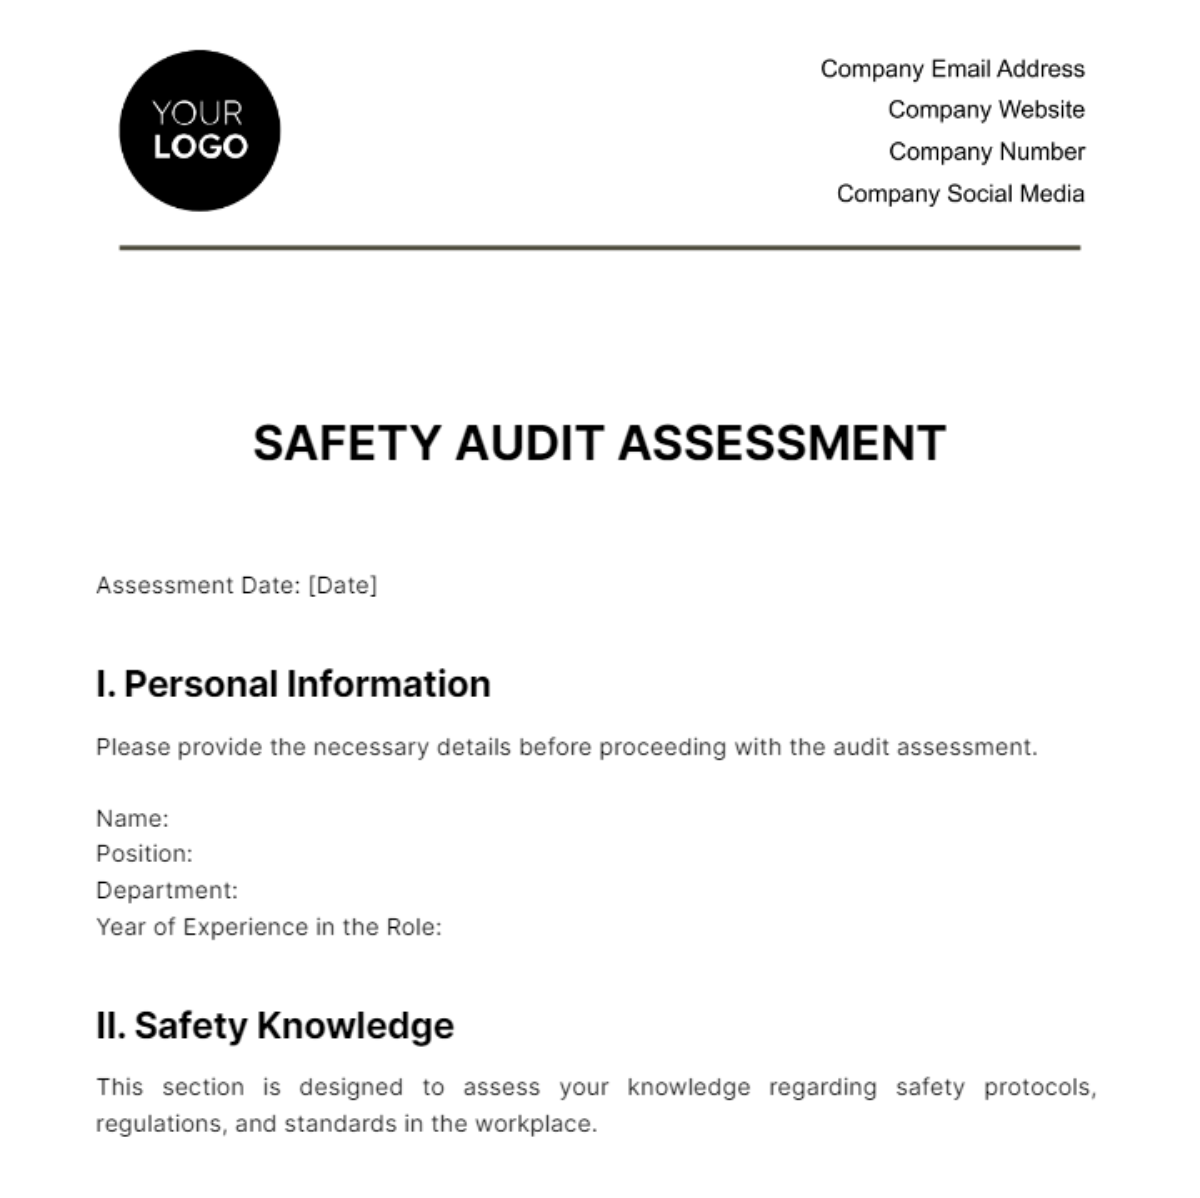 Safety Audit Assessment HR Template